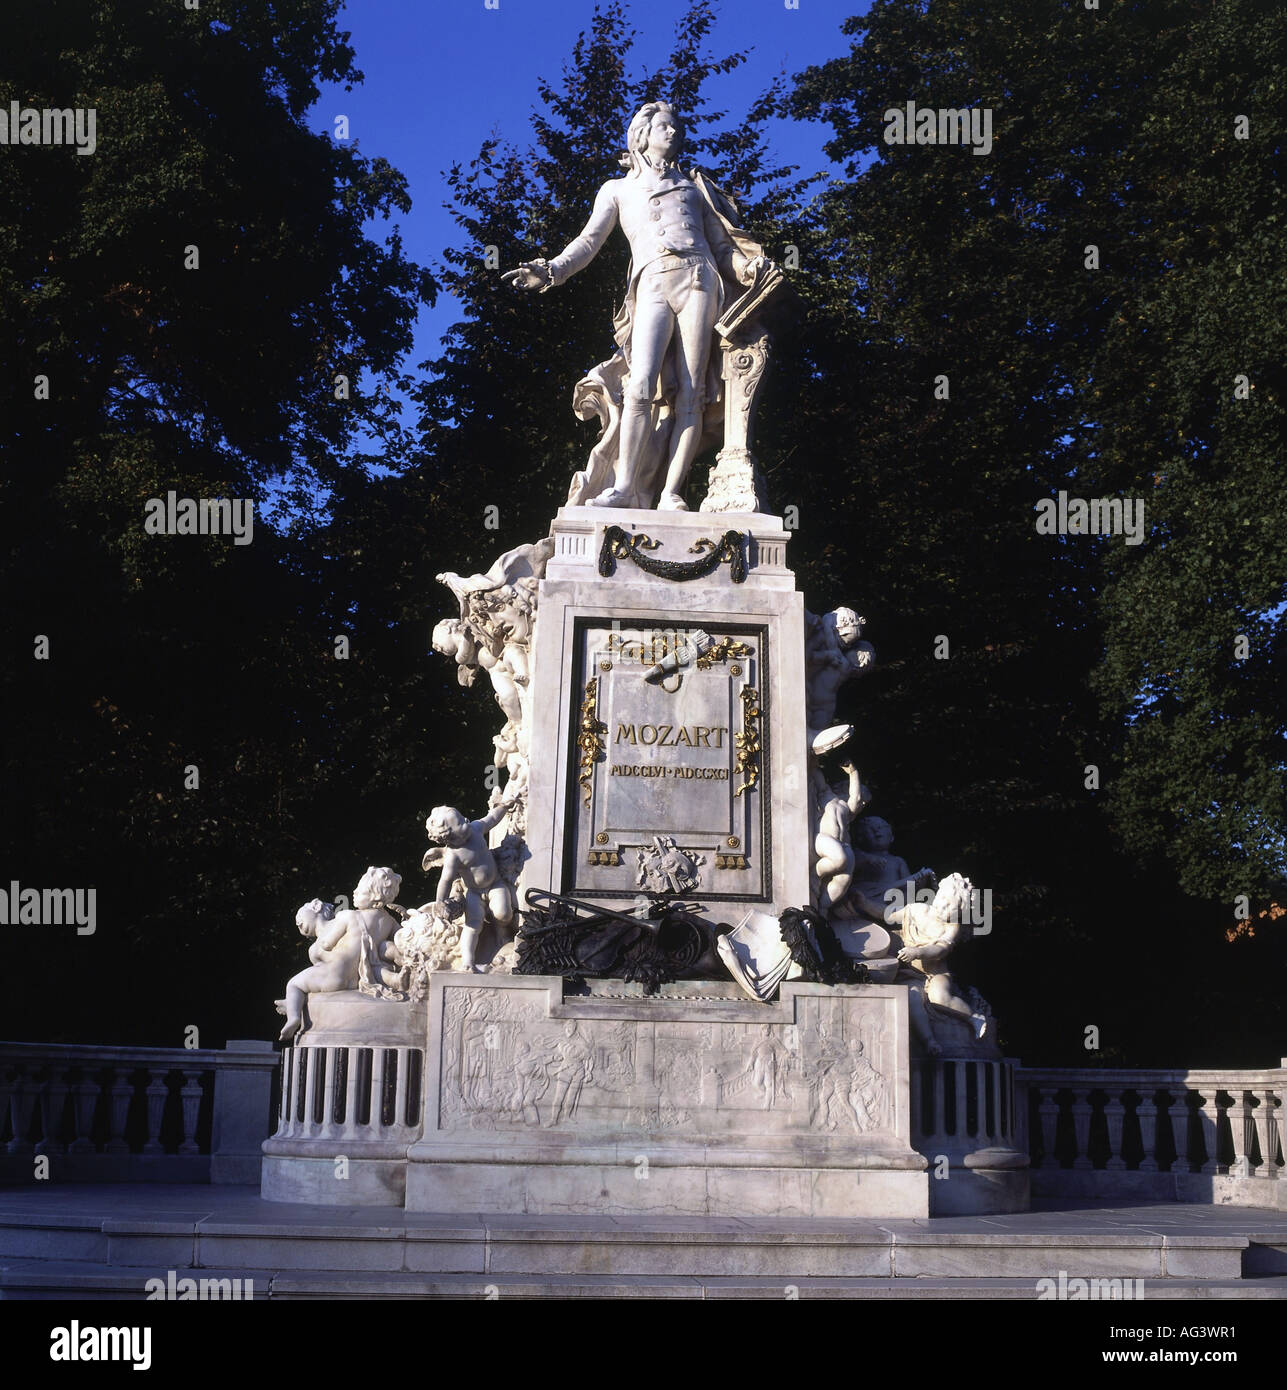 Mozart, Wolfgang Amadeus, 27.1.1756 - 5.12.1791, austrian composer, monument, Burggarten, Vienna, Austria, Viktor Tilgner, Stock Photo